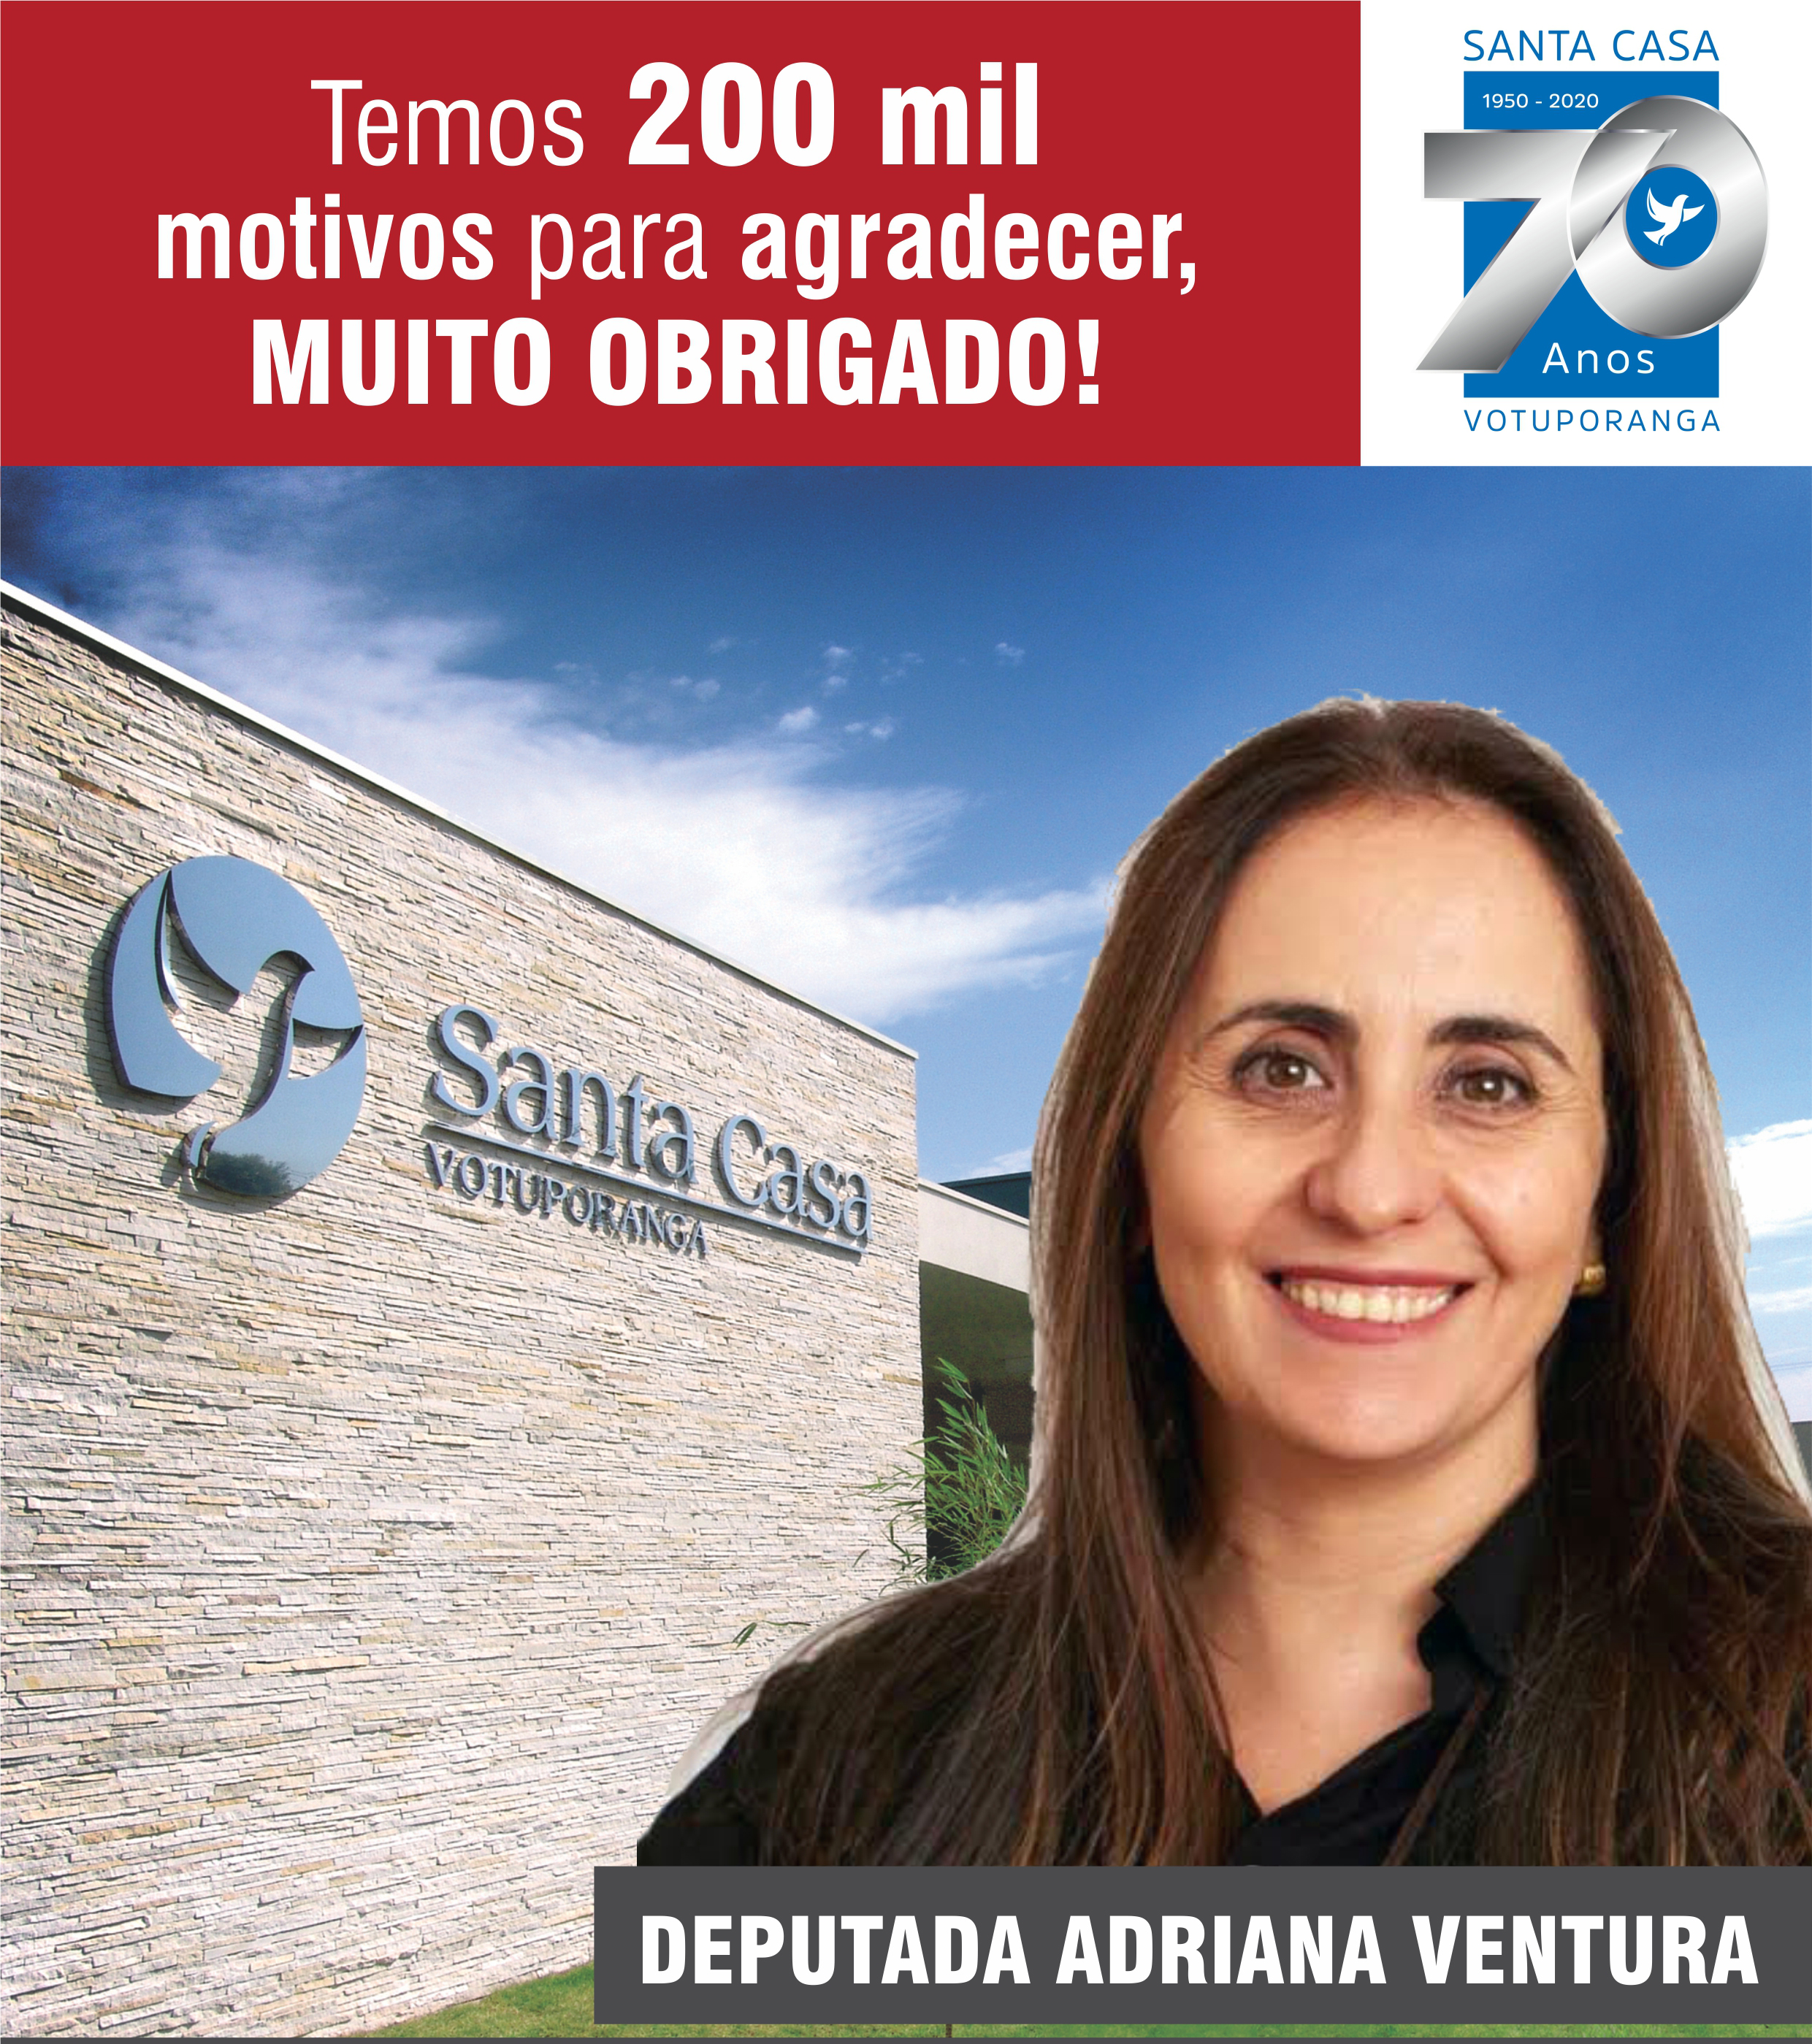 Santa Casa recebe R$200 mil de emenda da deputada Adriana Ventura
